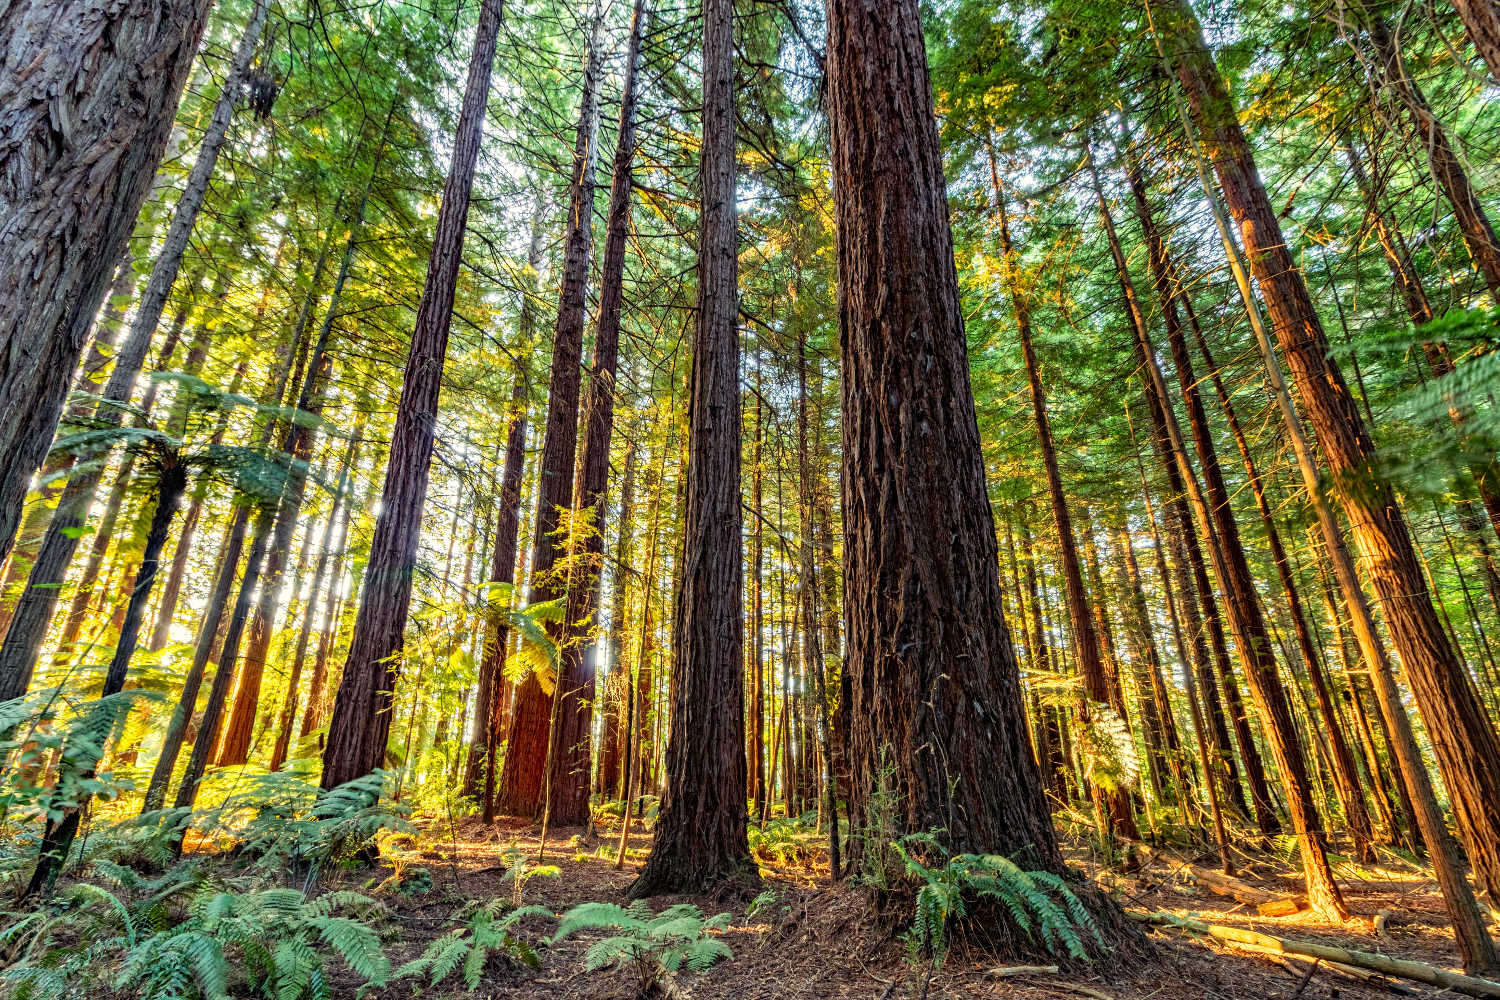 The Rotorua redwood trees in New Zealand, Bay of Plenty, North Island